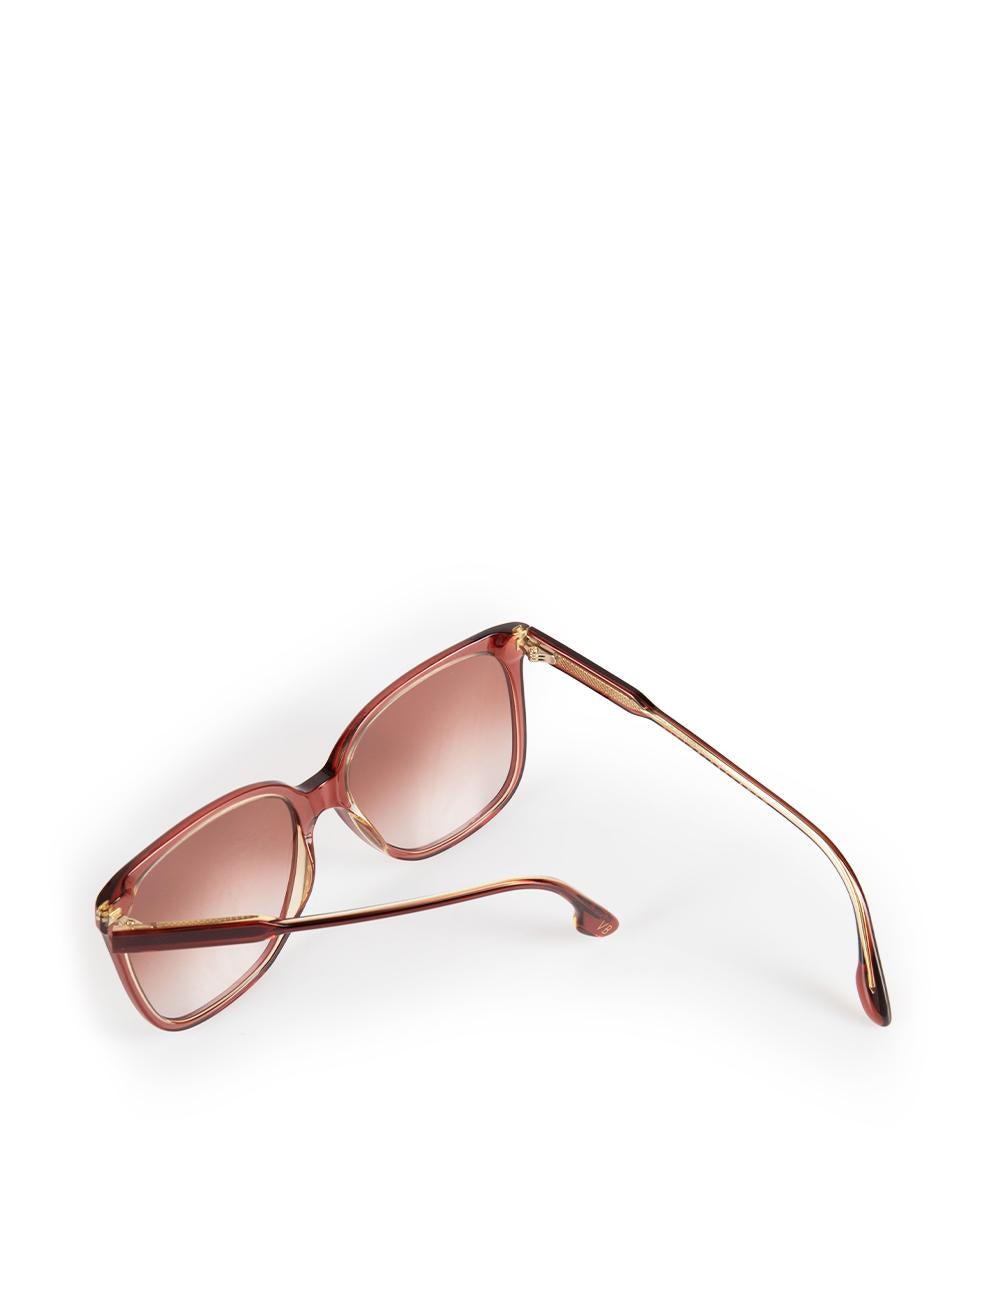 Victoria Beckham Wine / Honey Square Sunglasses For Sale 4